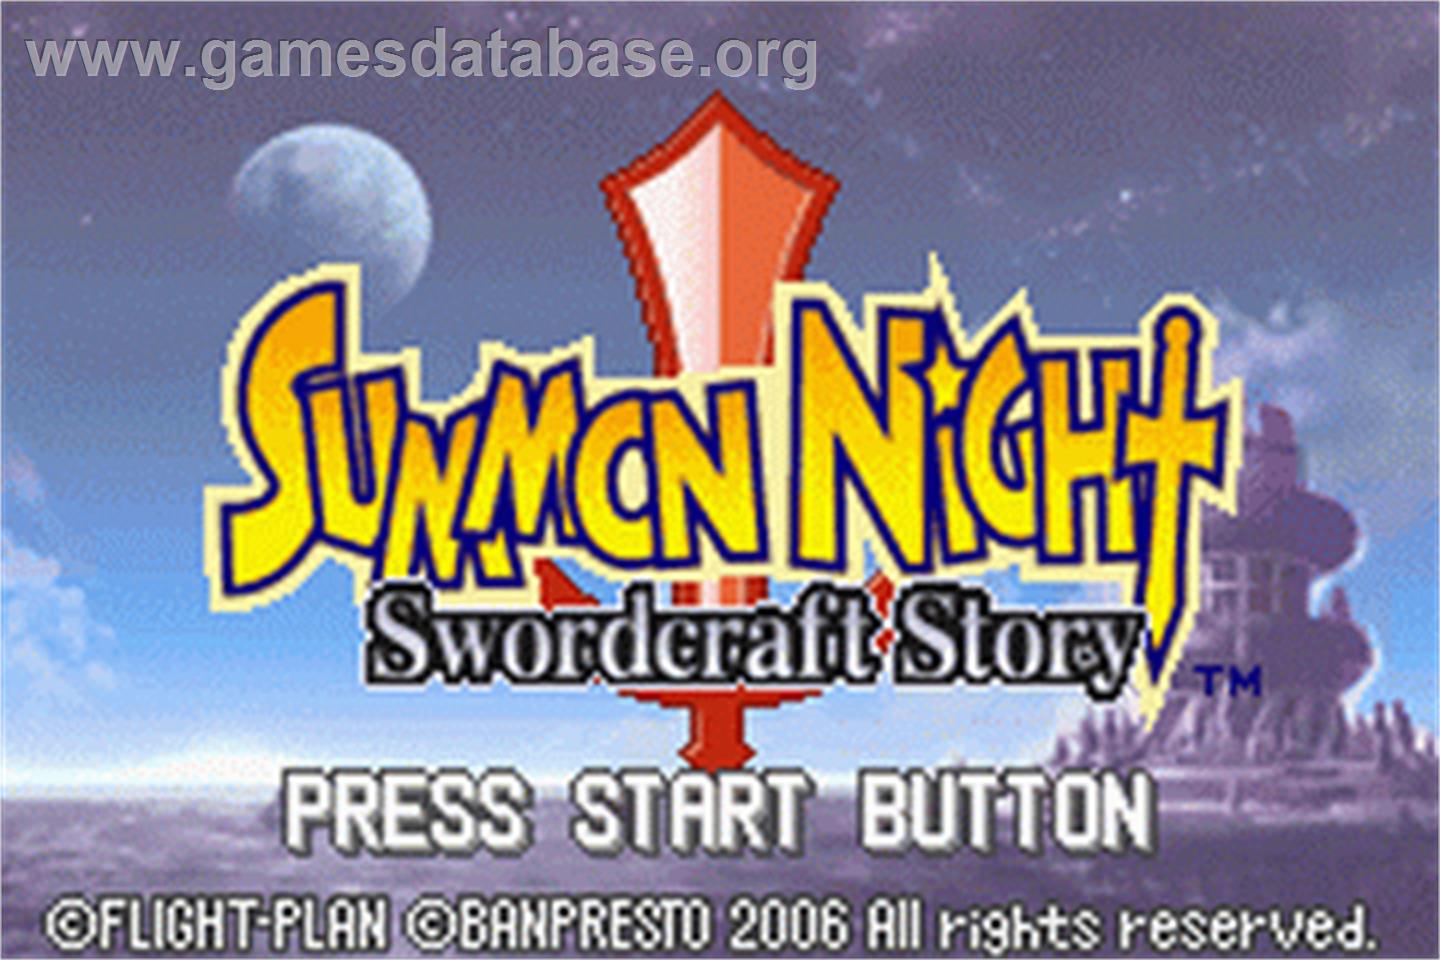 Summon Night: Swordcraft Story - Nintendo Game Boy Advance - Artwork - Title Screen